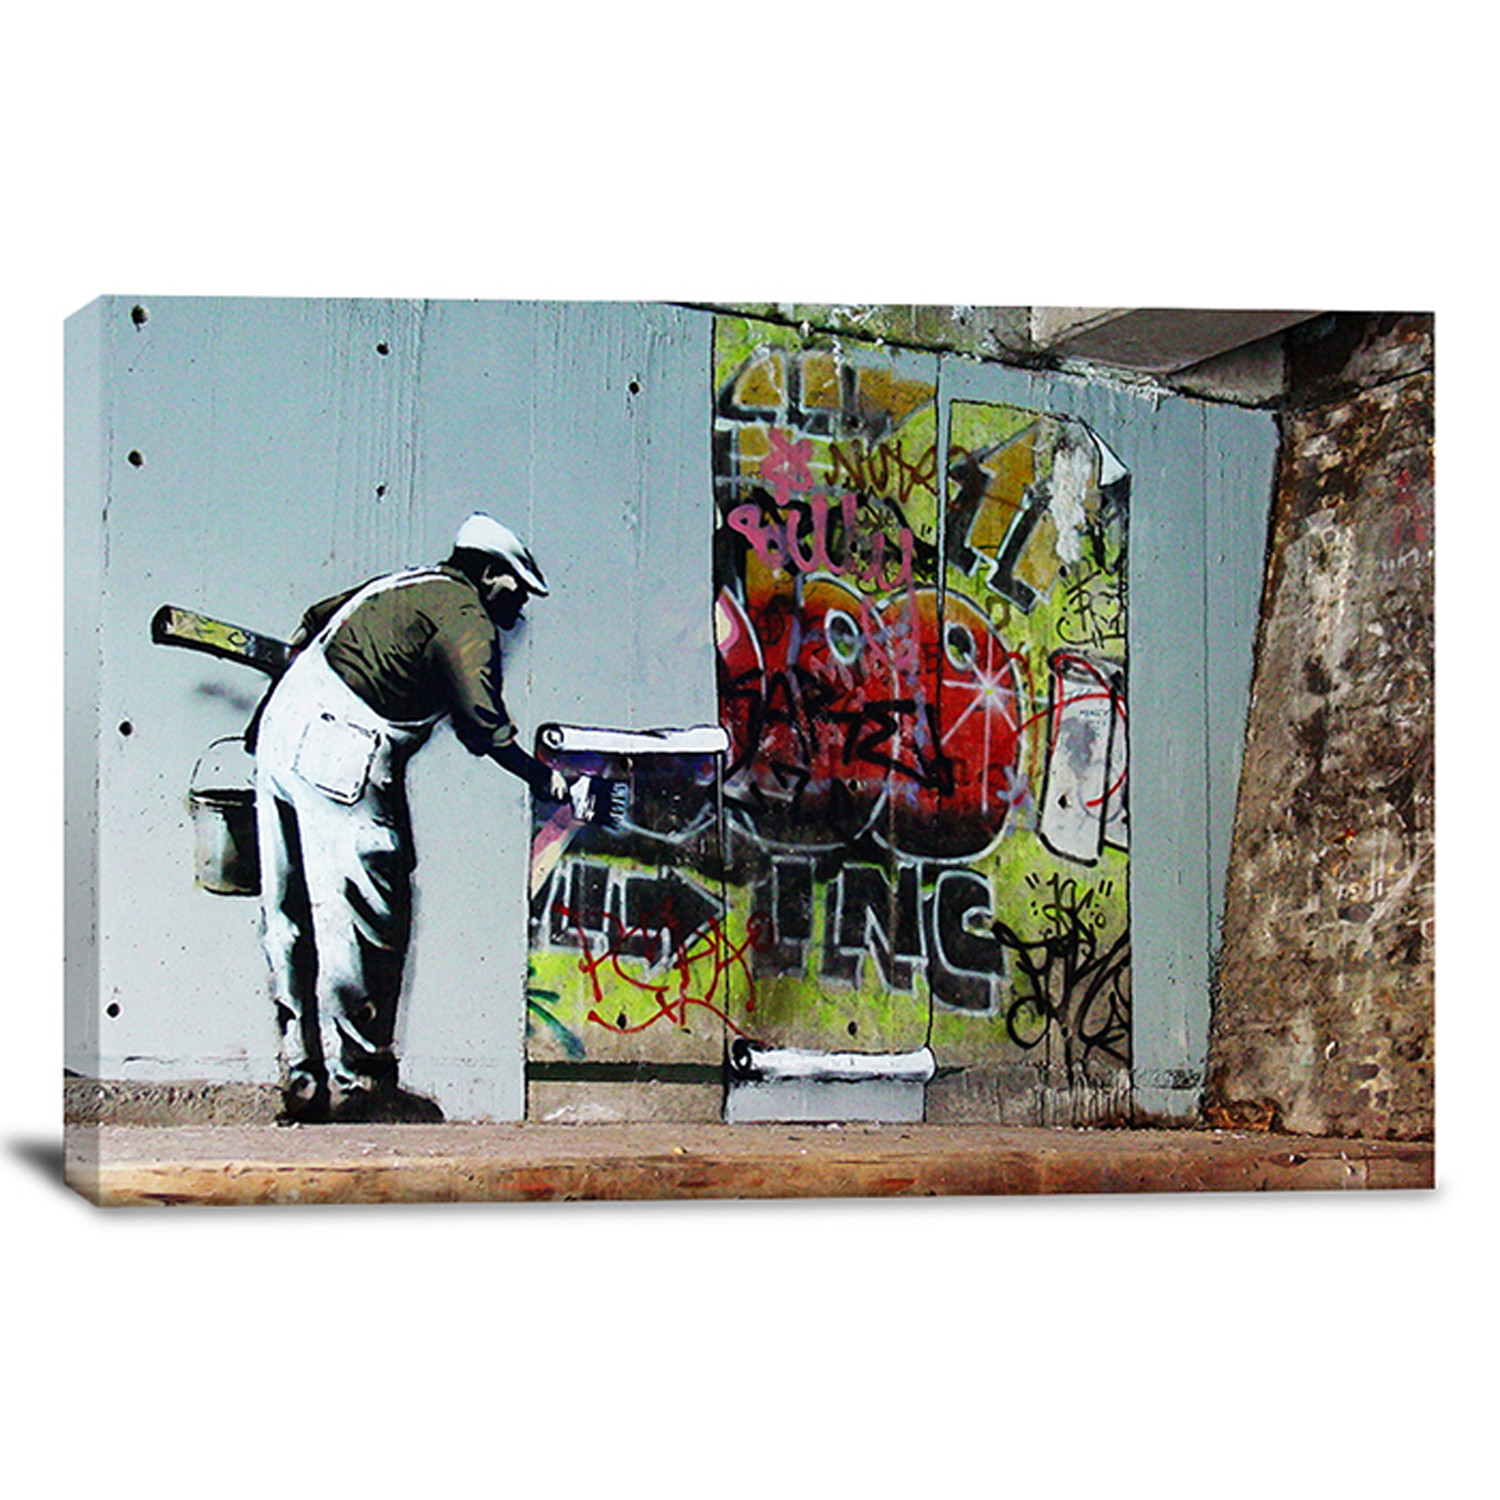 Graffiti Wallpaper Hanging (26x18) - Street Art on Canvas - Touch of Modern